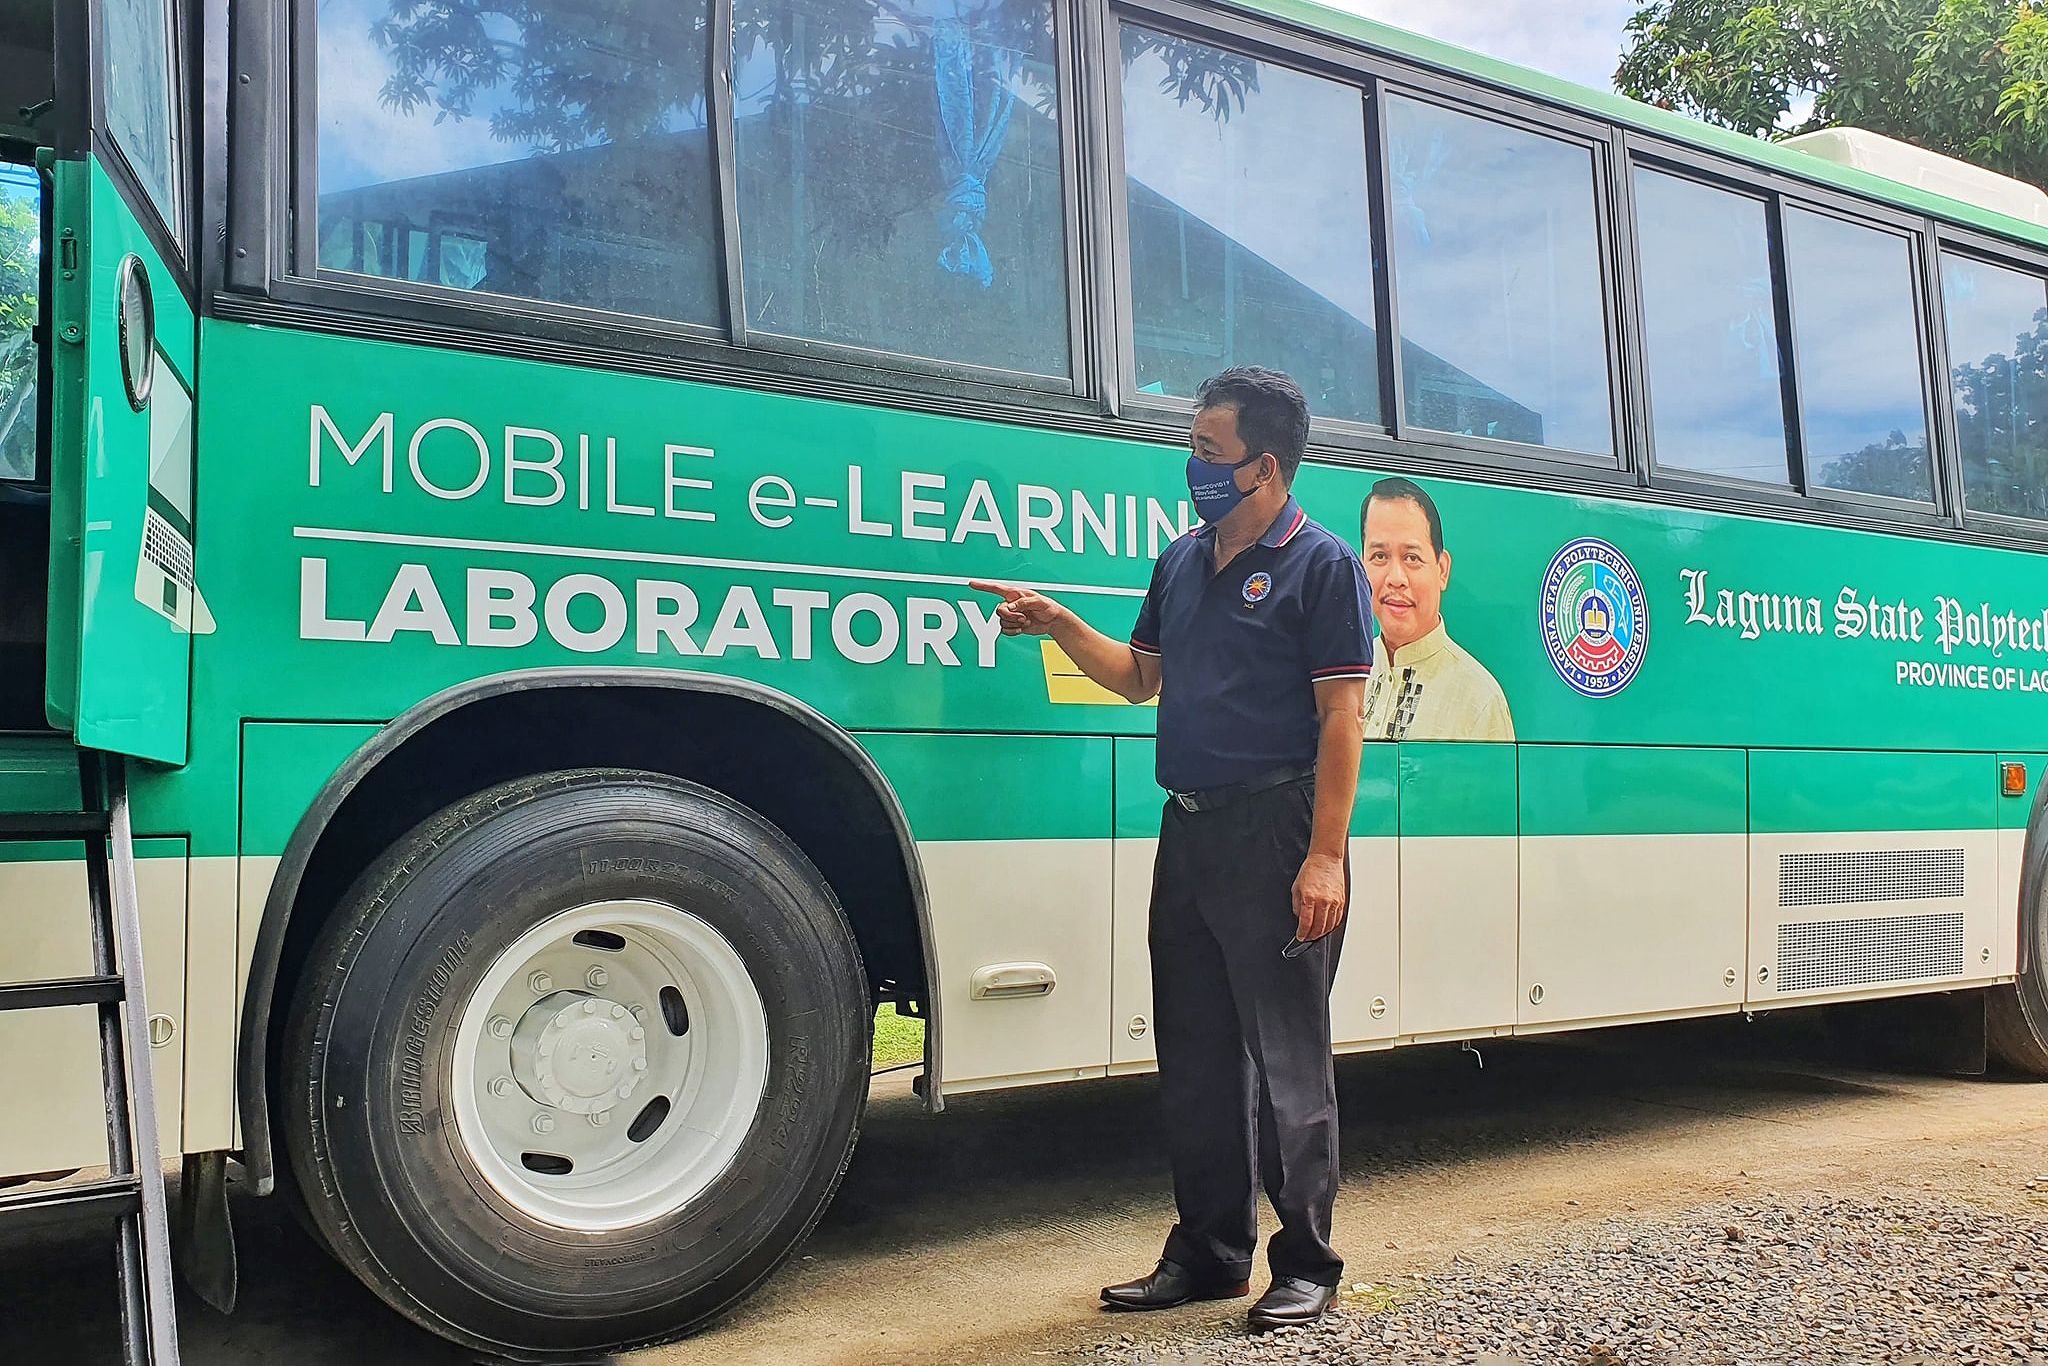 Laguna uses buses as mobile learning laboratories